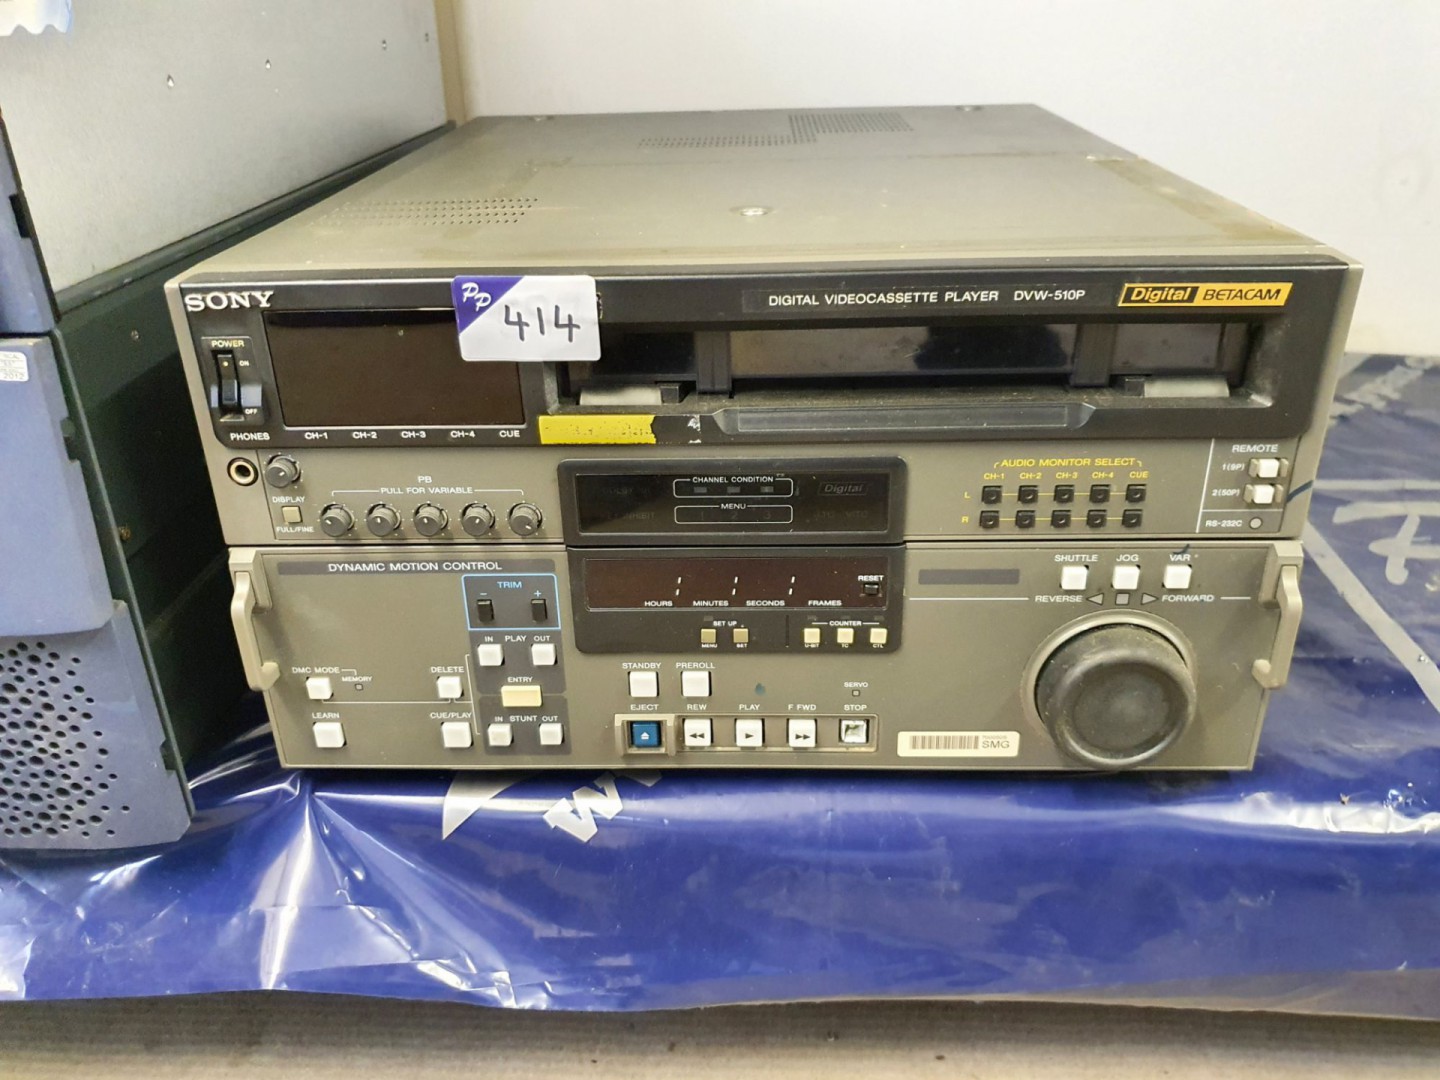 Sony DVW-510P digital video cassette player